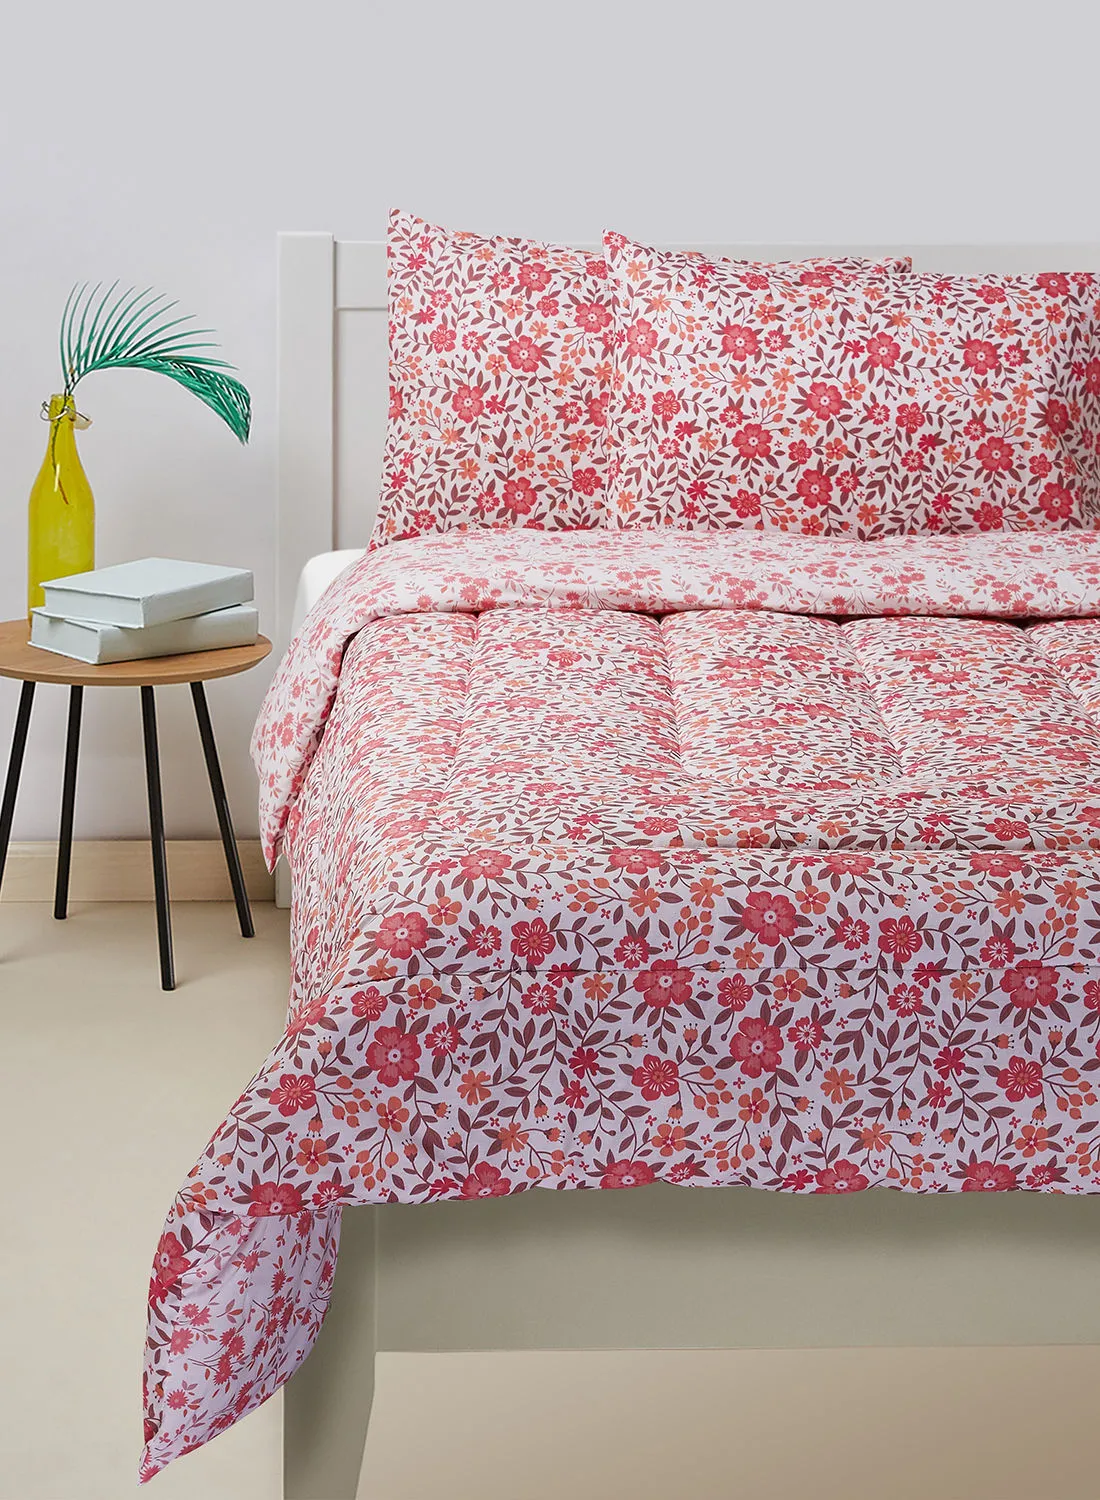 Amal Comforter Set Queen Size All Season Everyday Use Bedding Set 100% Cotton 3 Pieces 1 Comforter 2 Pillow Covers  Fuchsia